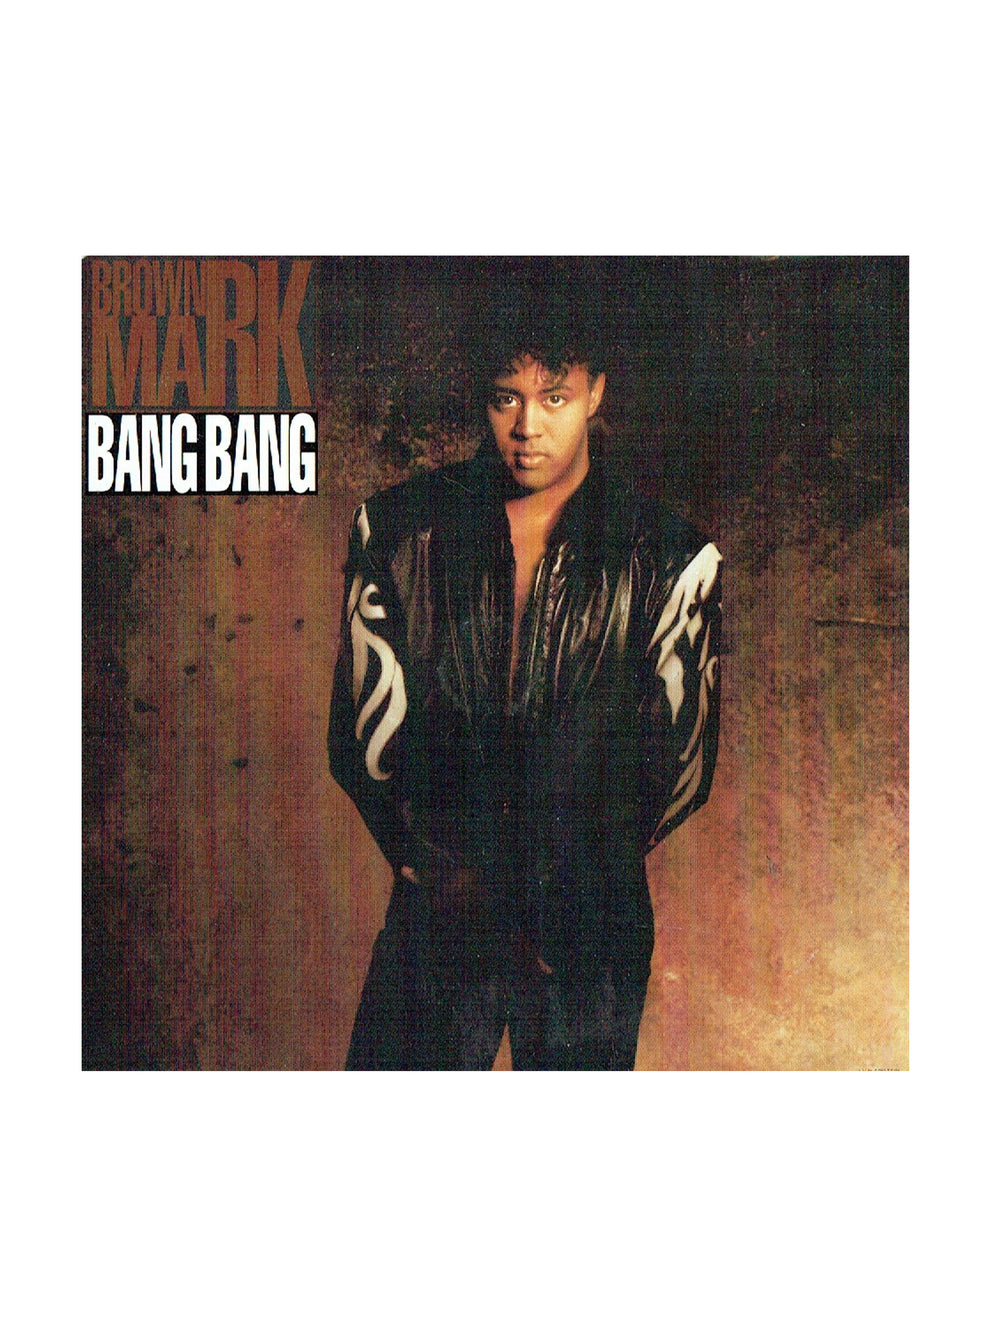 Brown Mark Bang Bang 4 Track CD Single UK Prince